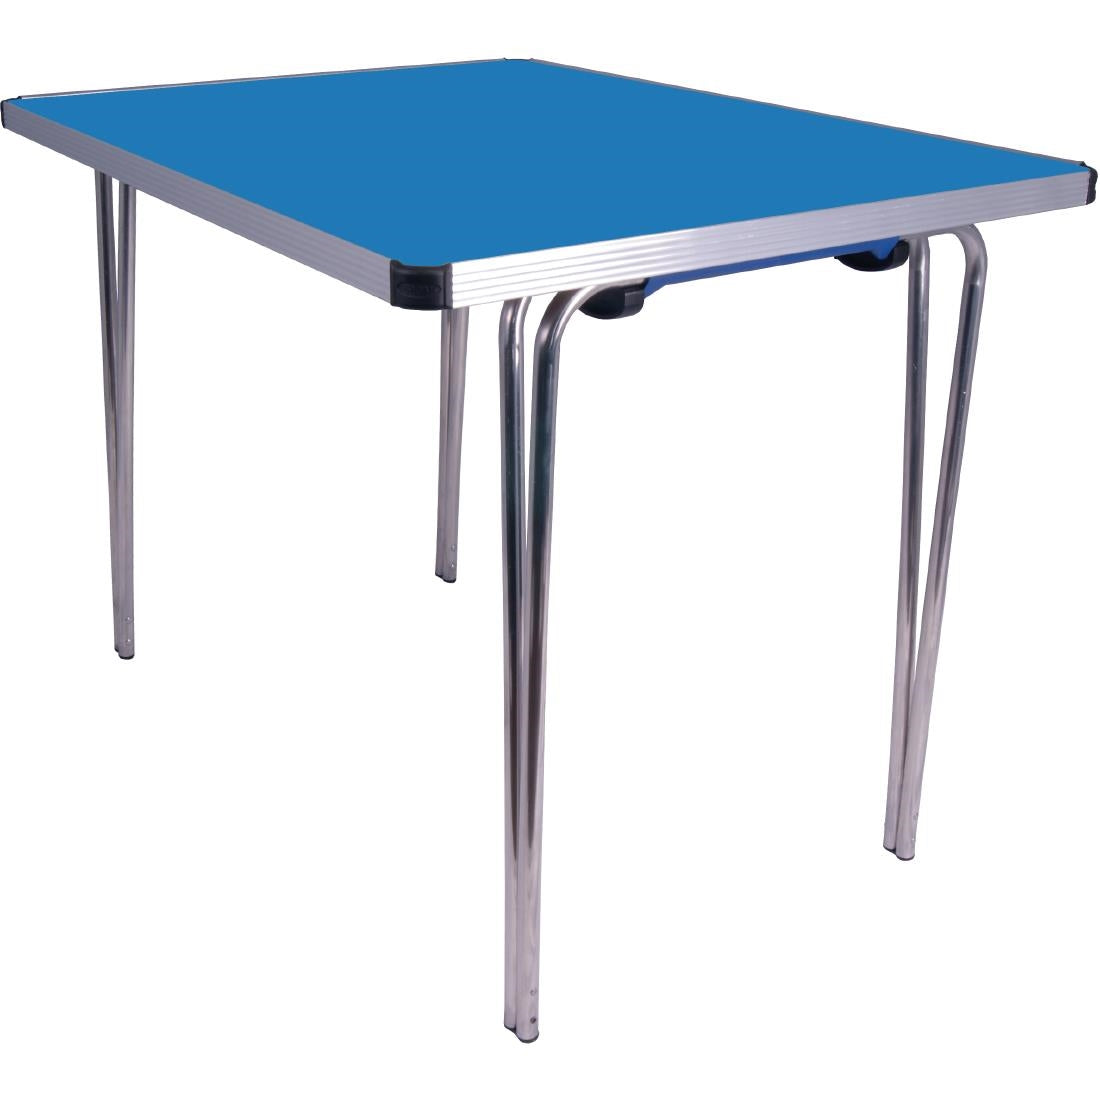 DM608 Gopak Contour Folding Table Blue 3ft JD Catering Equipment Solutions Ltd